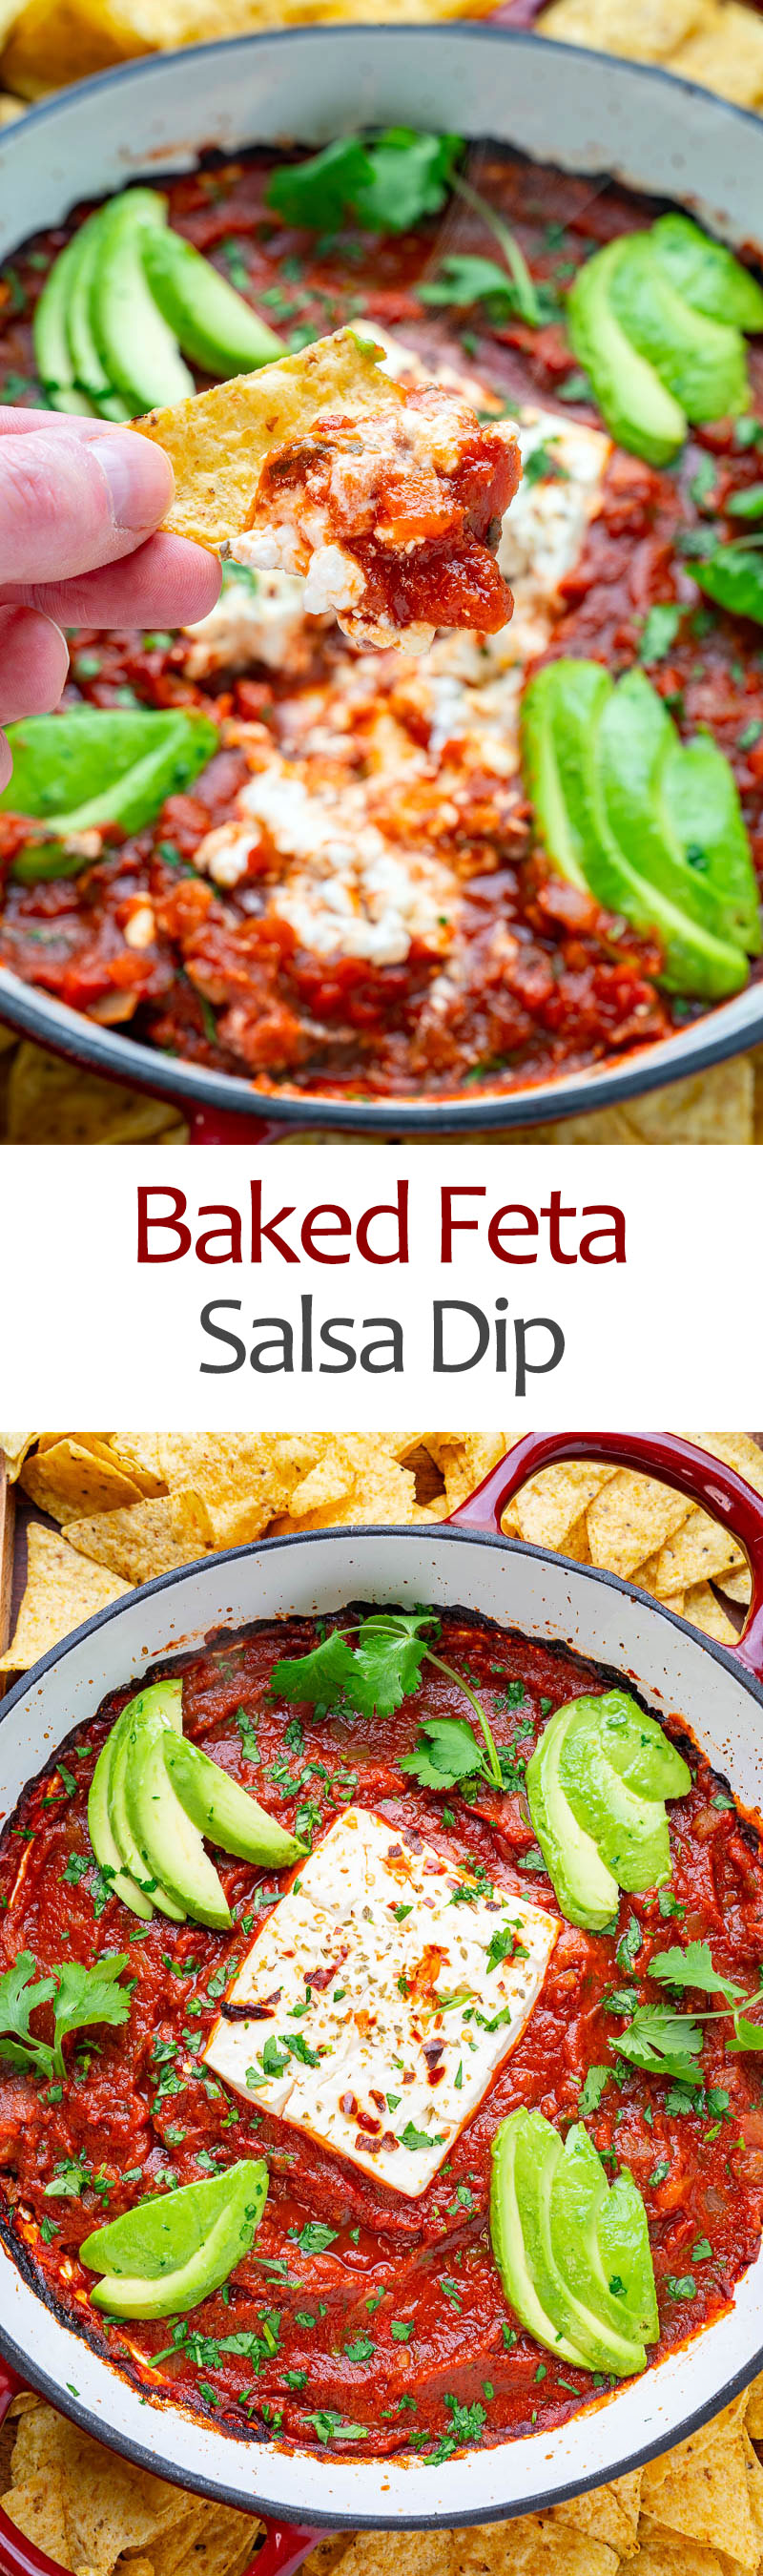 Baked Feta Salsa Dip